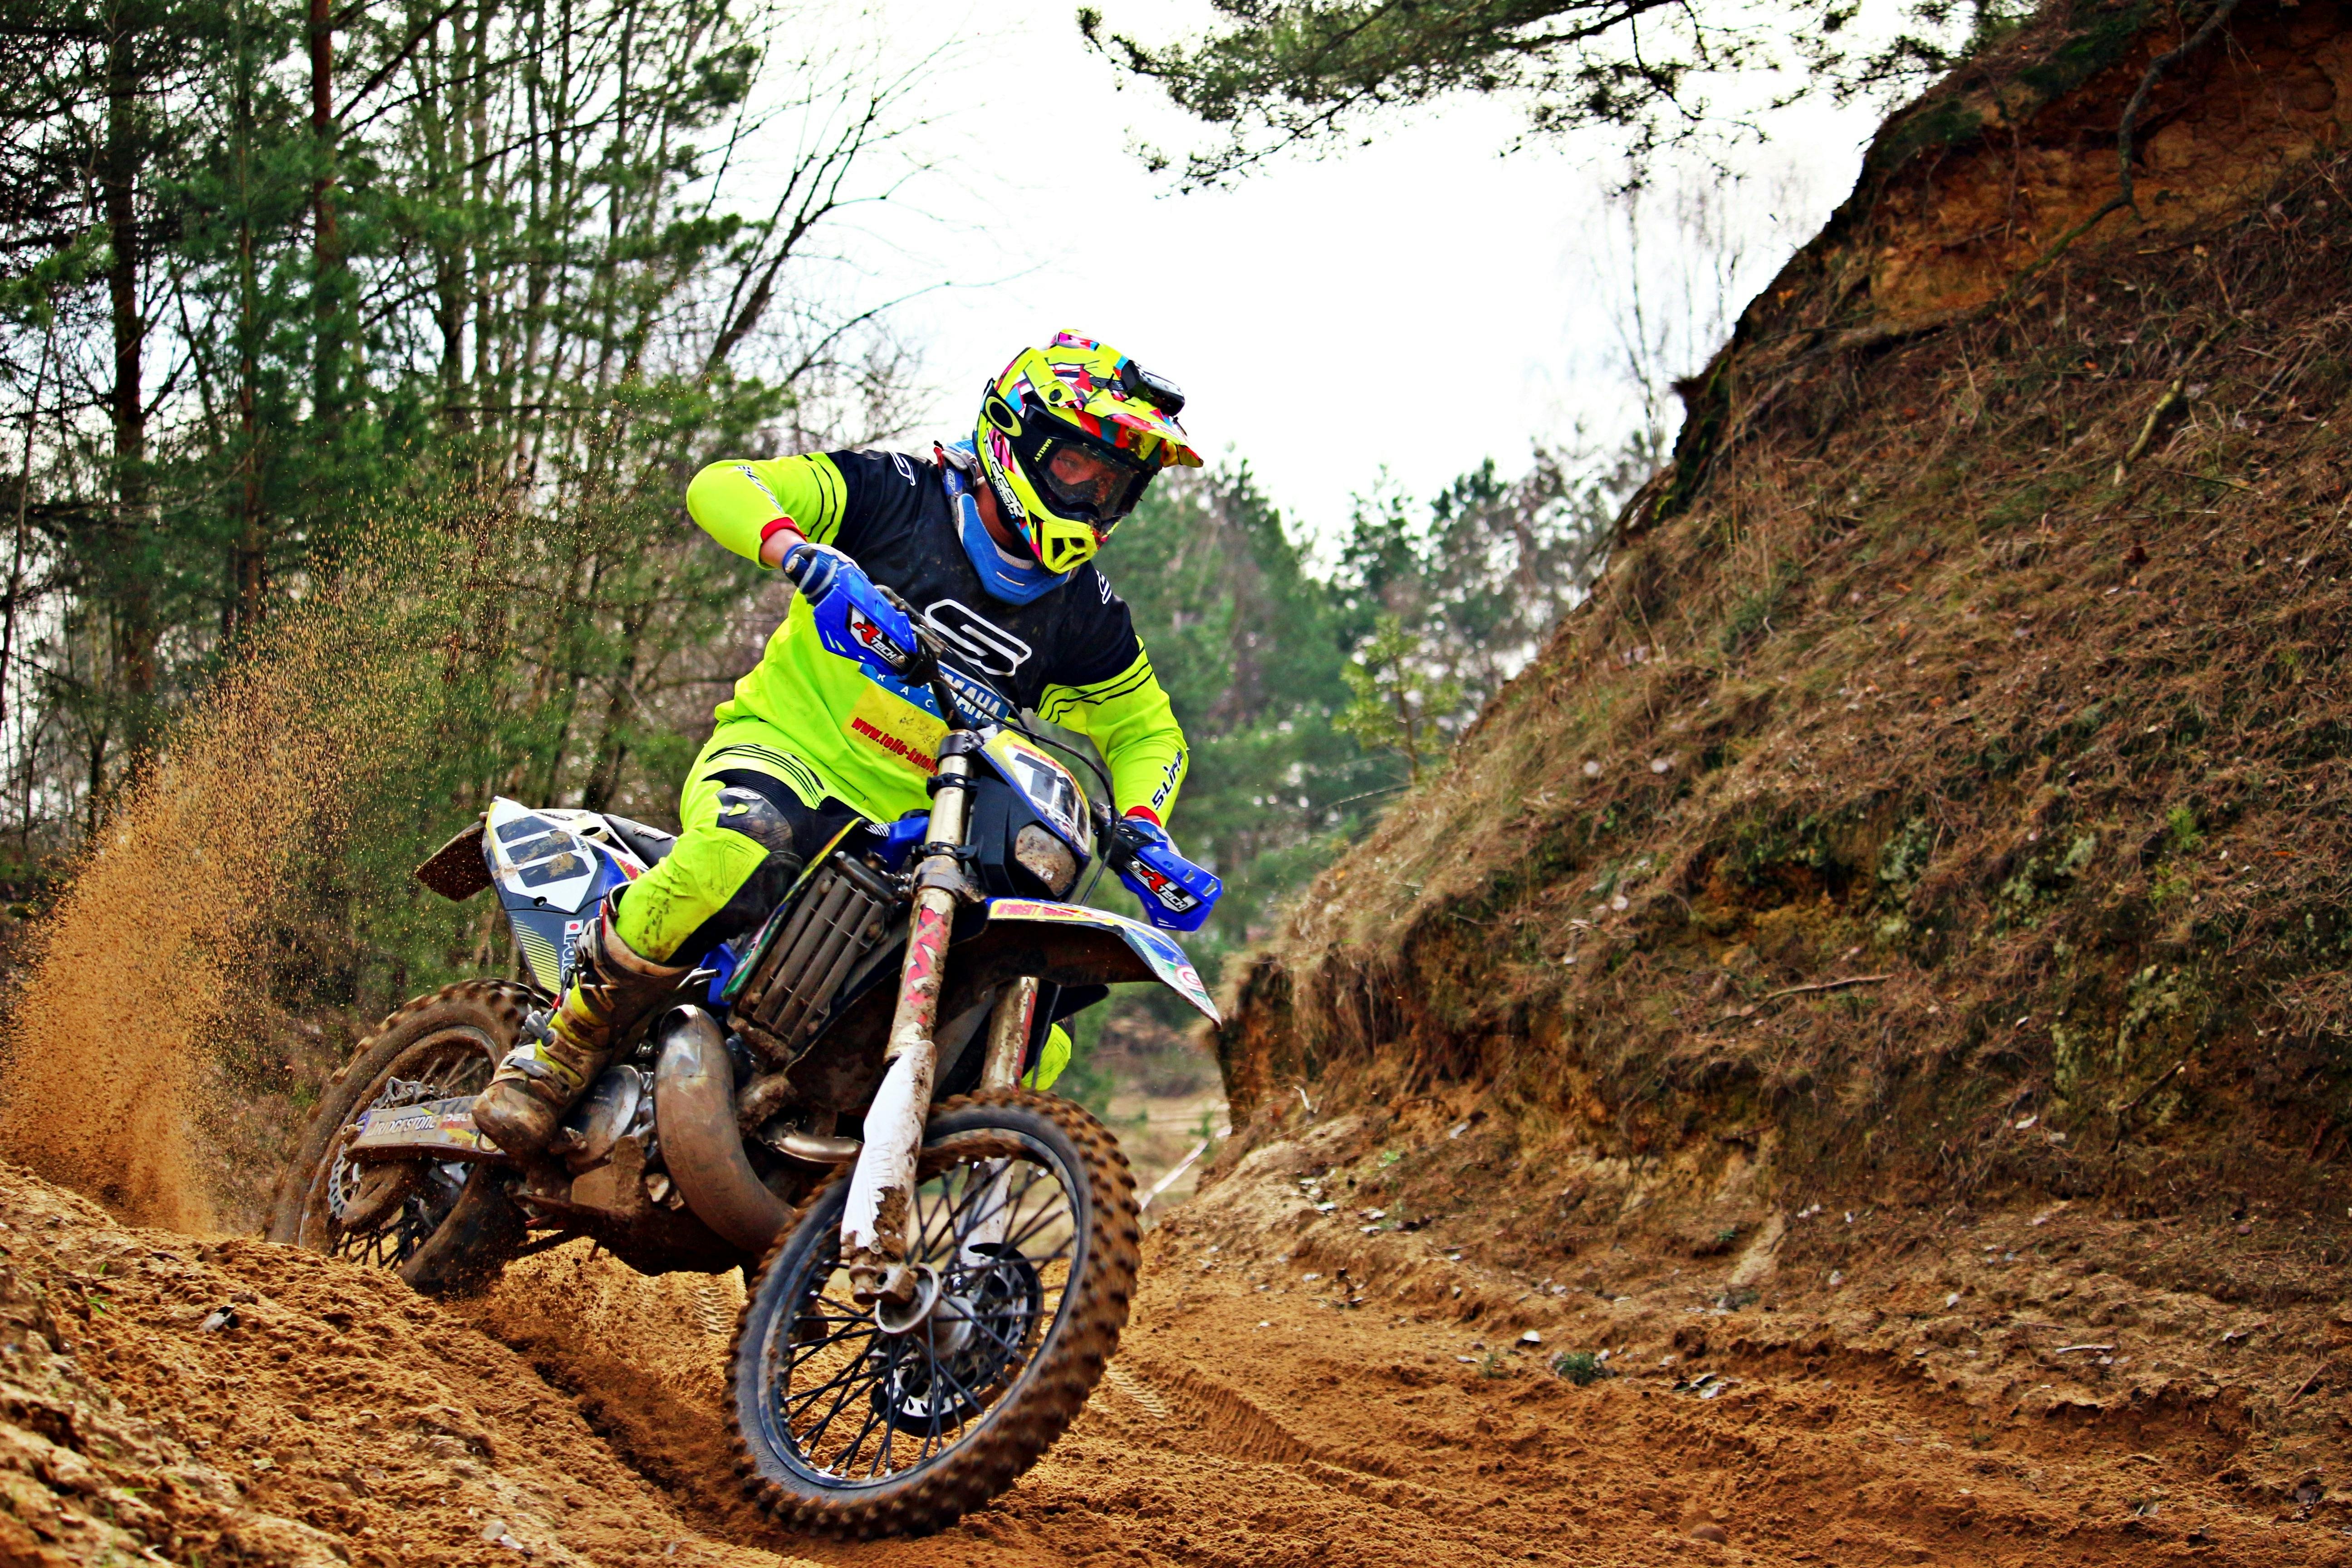 Rider Riding Green Motocross Dirt Bike . Free Stock Photo5184 x 3456